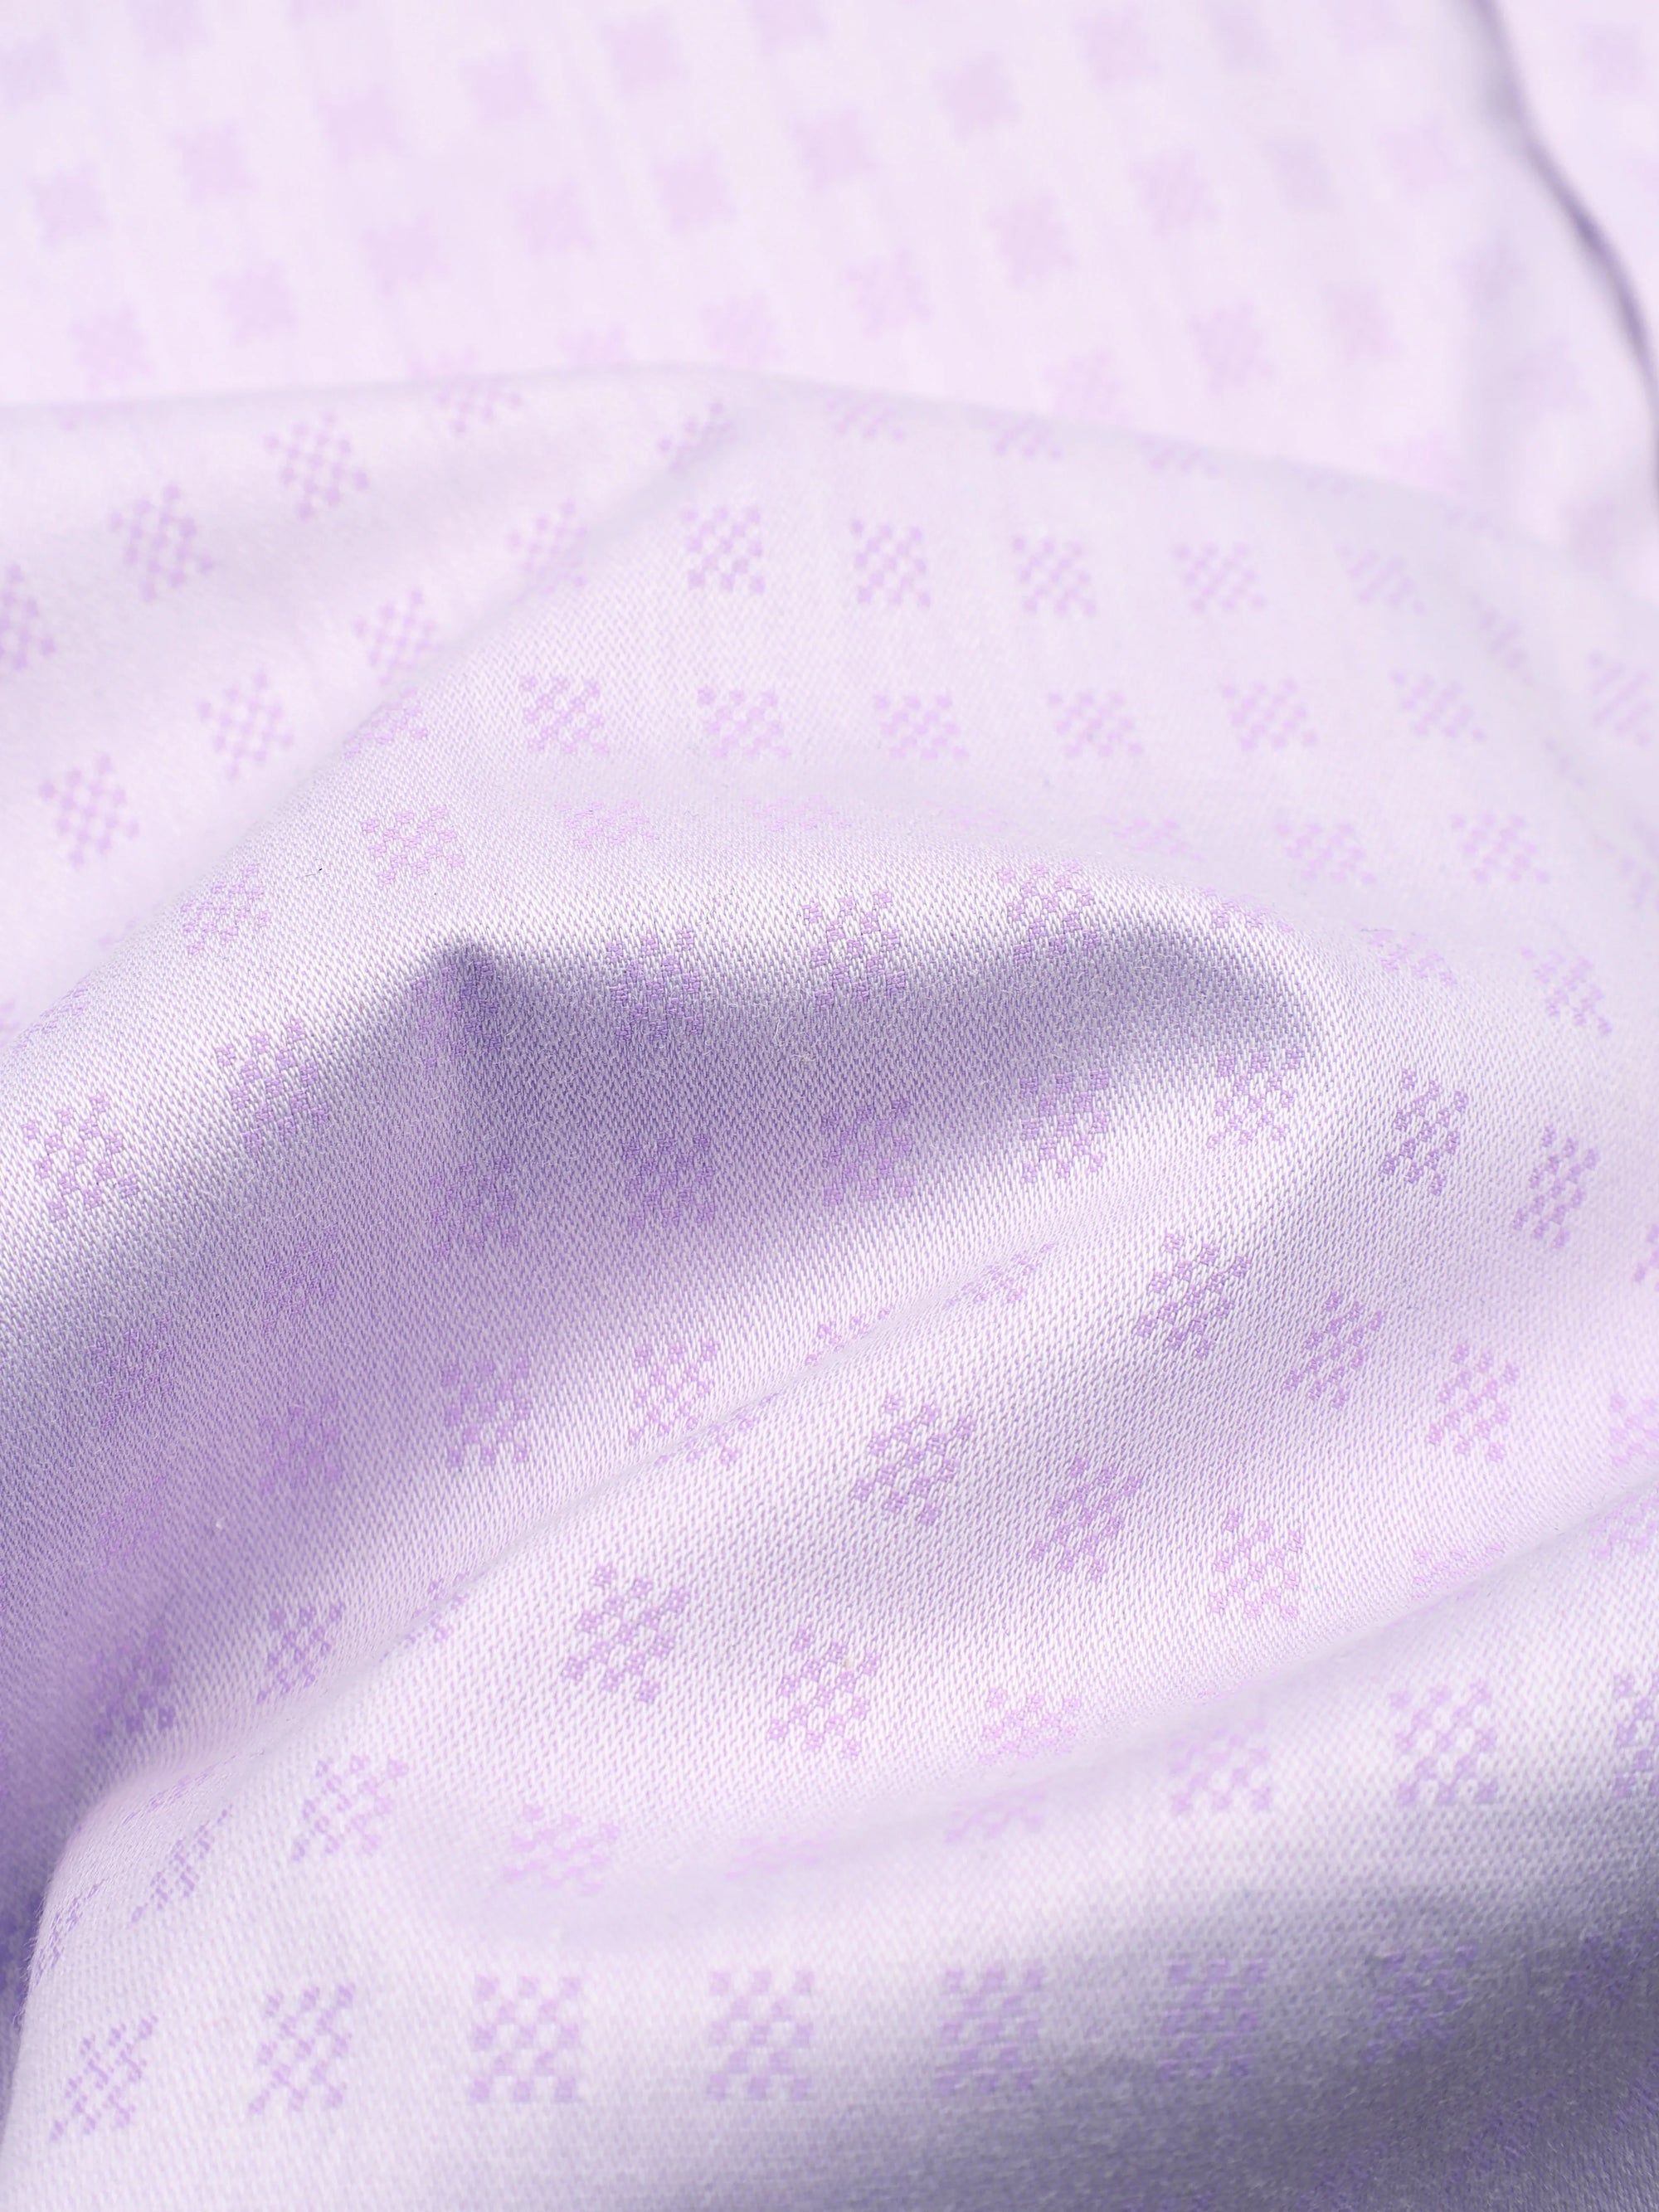 Thistle Purple With Shephered Dobby Textured Jacquard Cotton Shirt